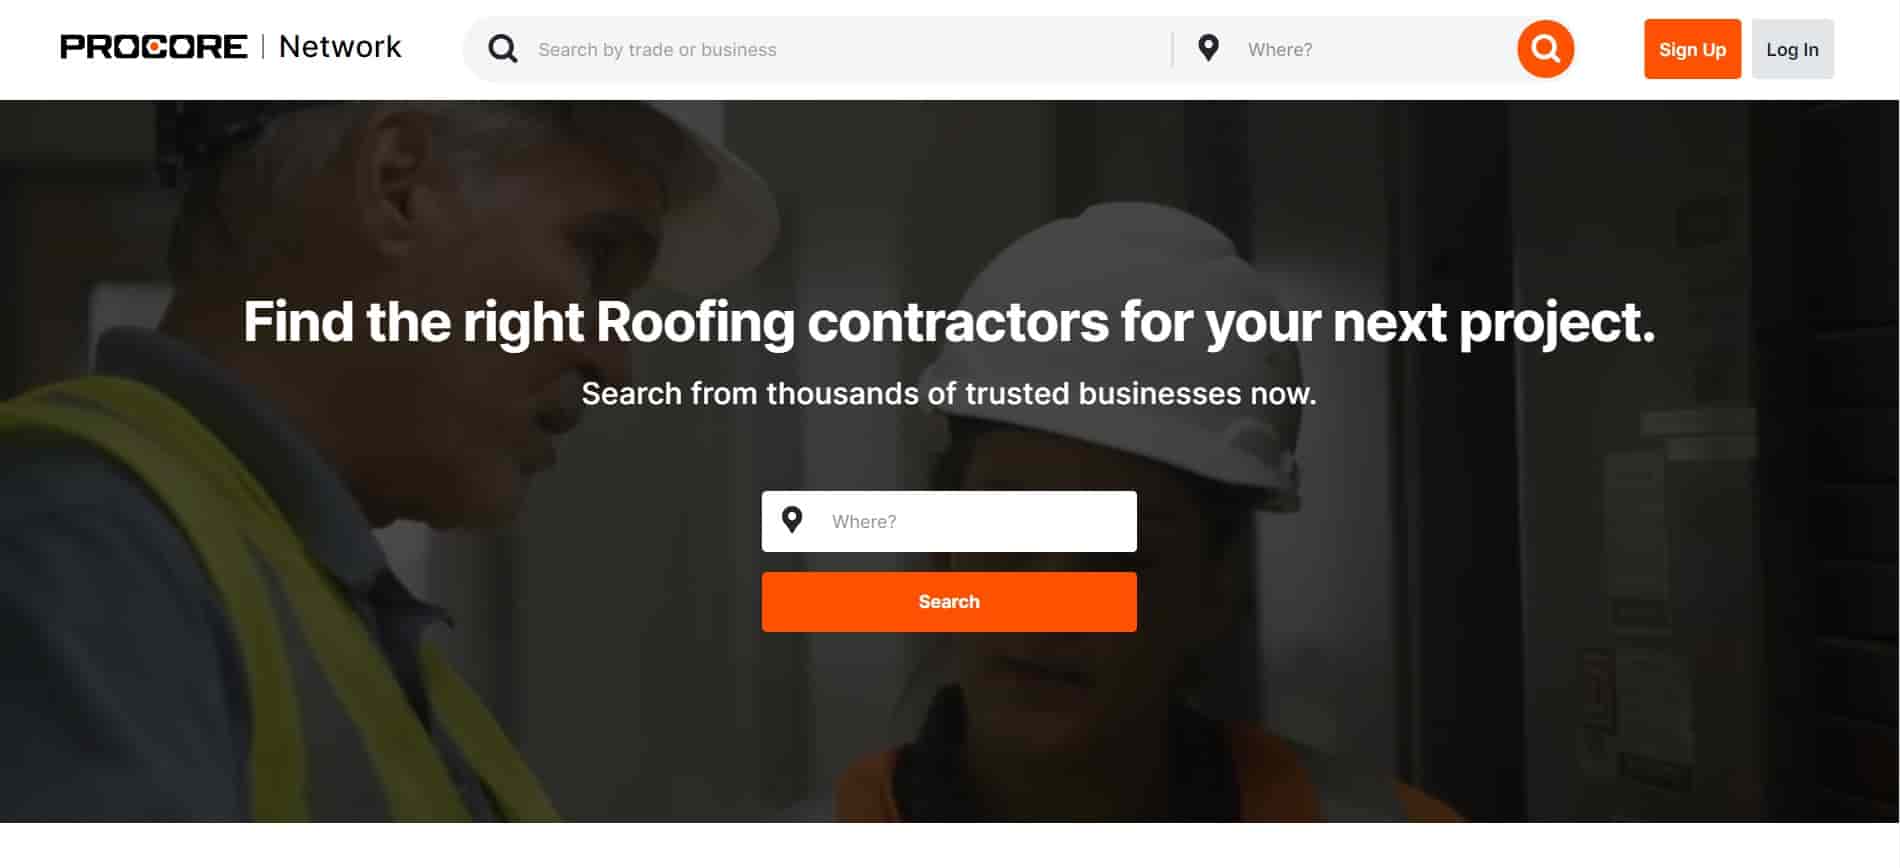 Procore's website roofing section's screenshot